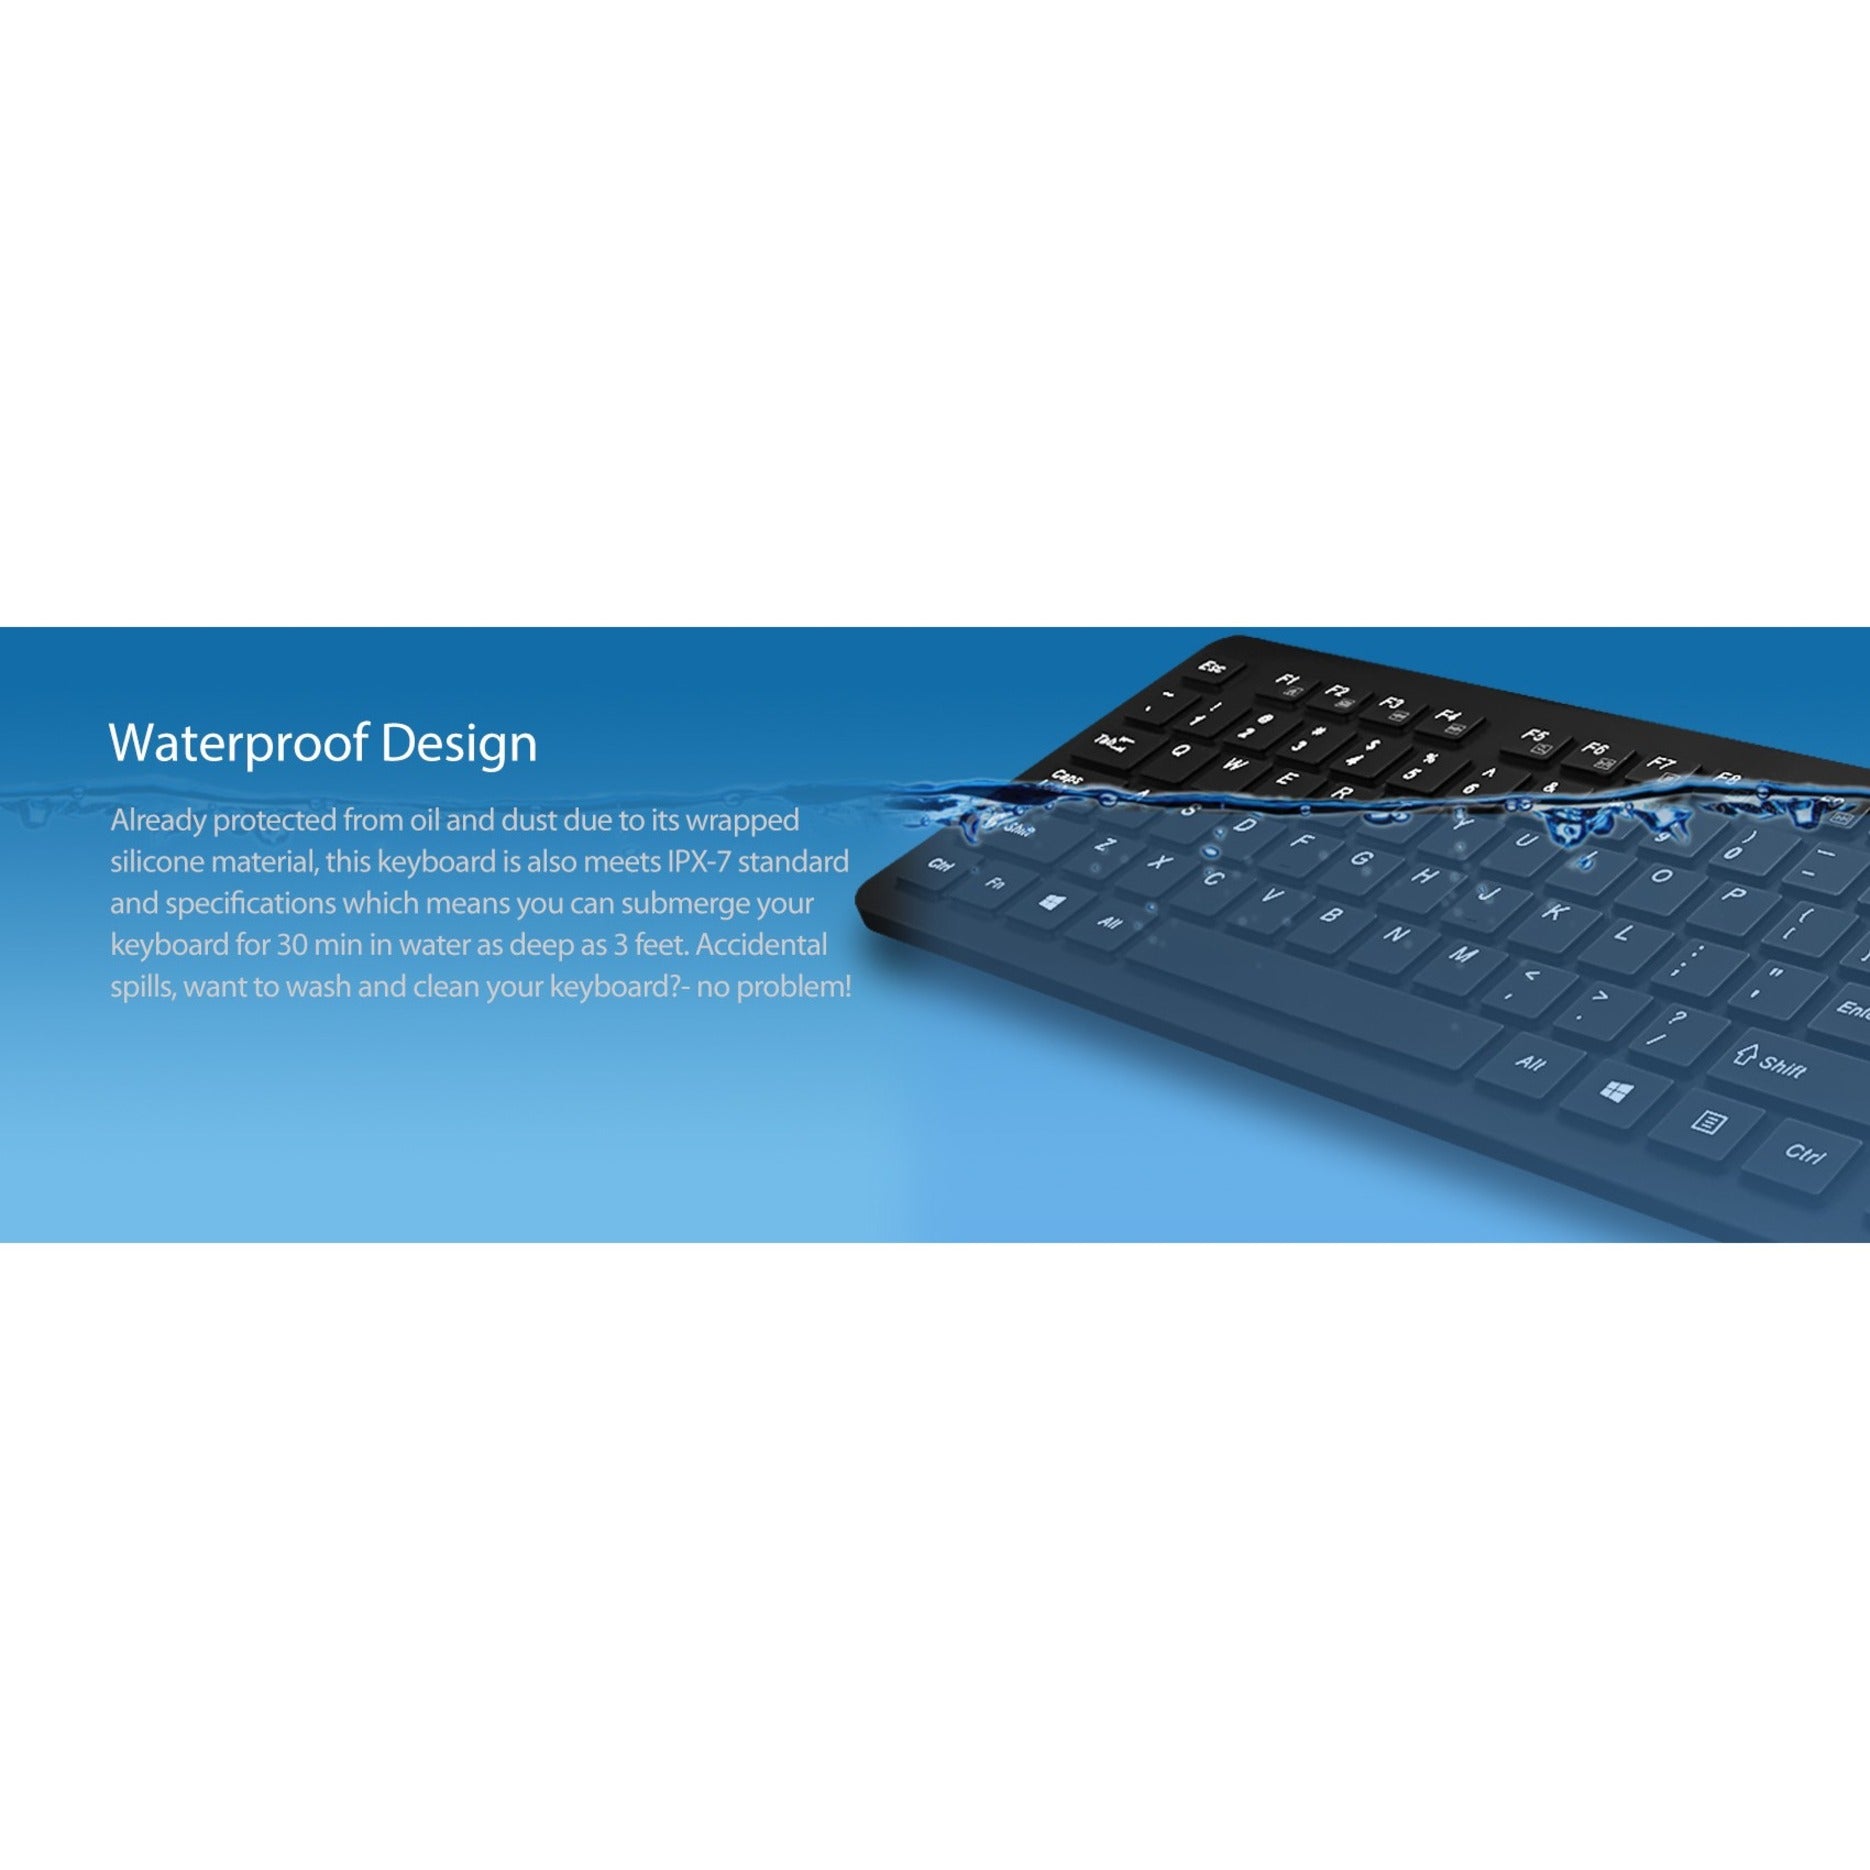 Adesso AKB-235UB Antimicrobial Waterproof Desktop Keyboard, Plug & Play, Spill Proof, Dust Resistant, Oil Resistant